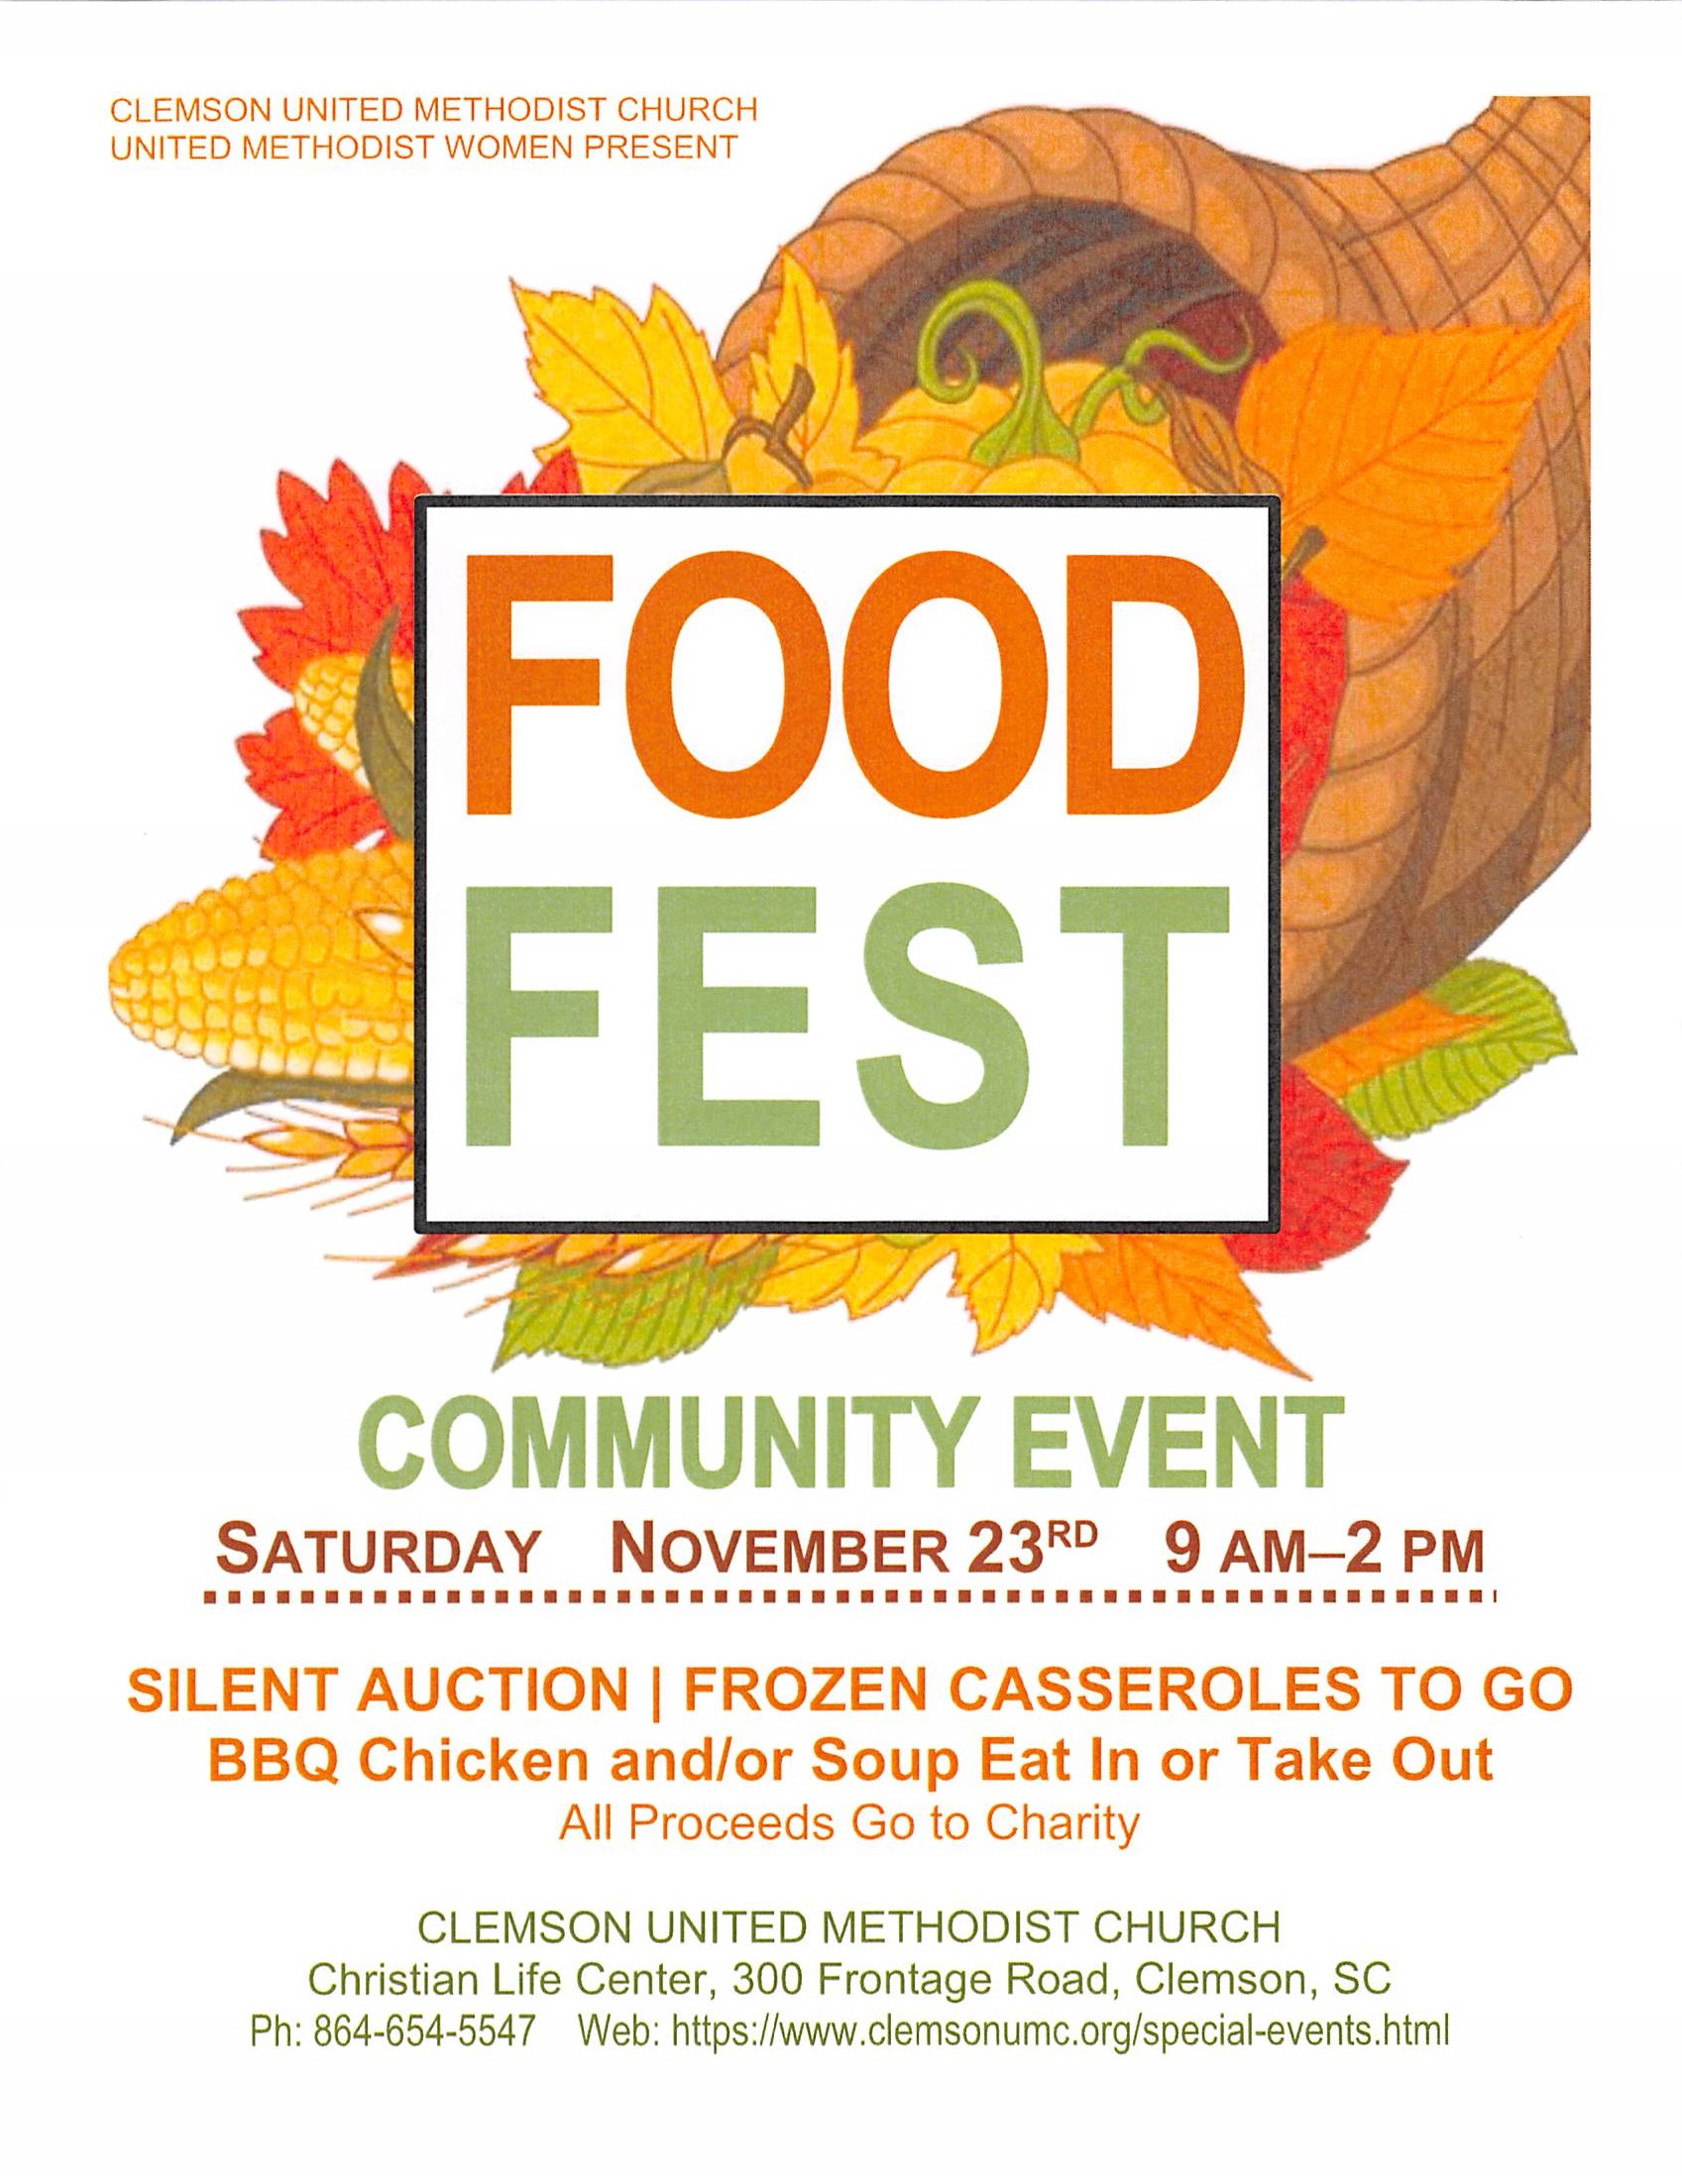 Food Fest November 23, 2019 9am to 2pm Clemson United Methodist Church